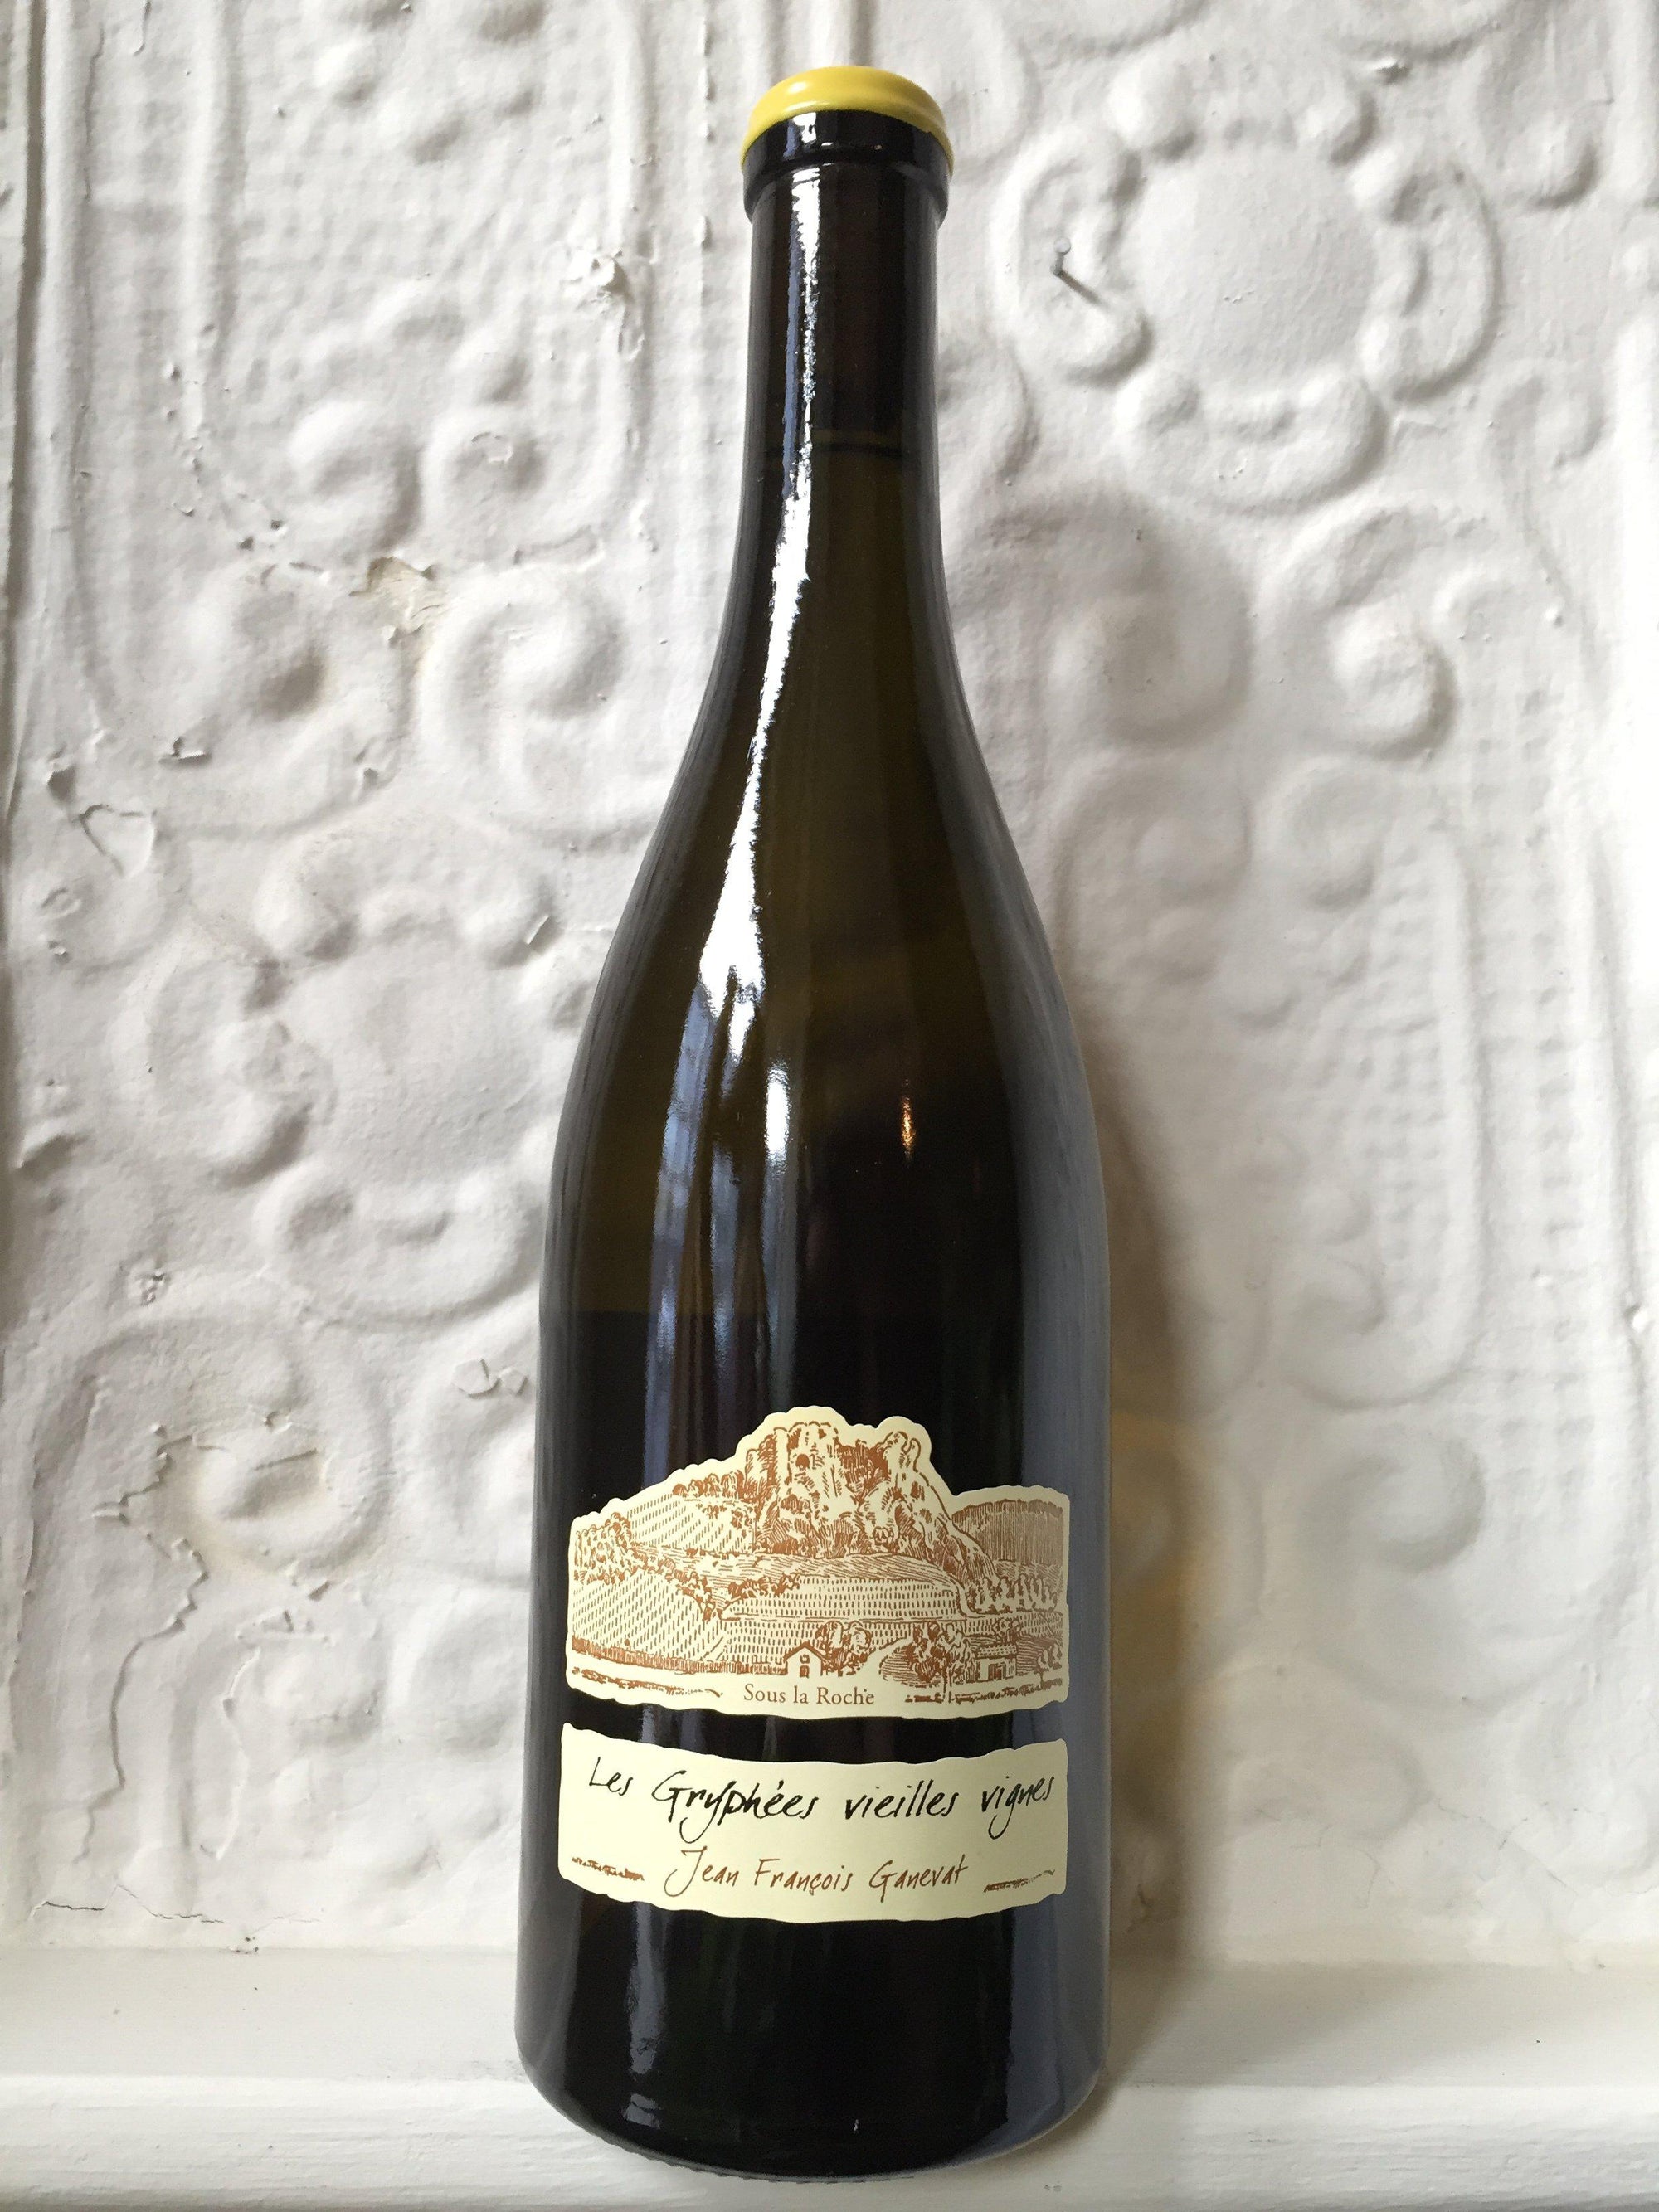 Old Vine Chardonnay "Les Gryphees", Ganevat 2015 (Jura, France)-Wine-Bibber & Bell